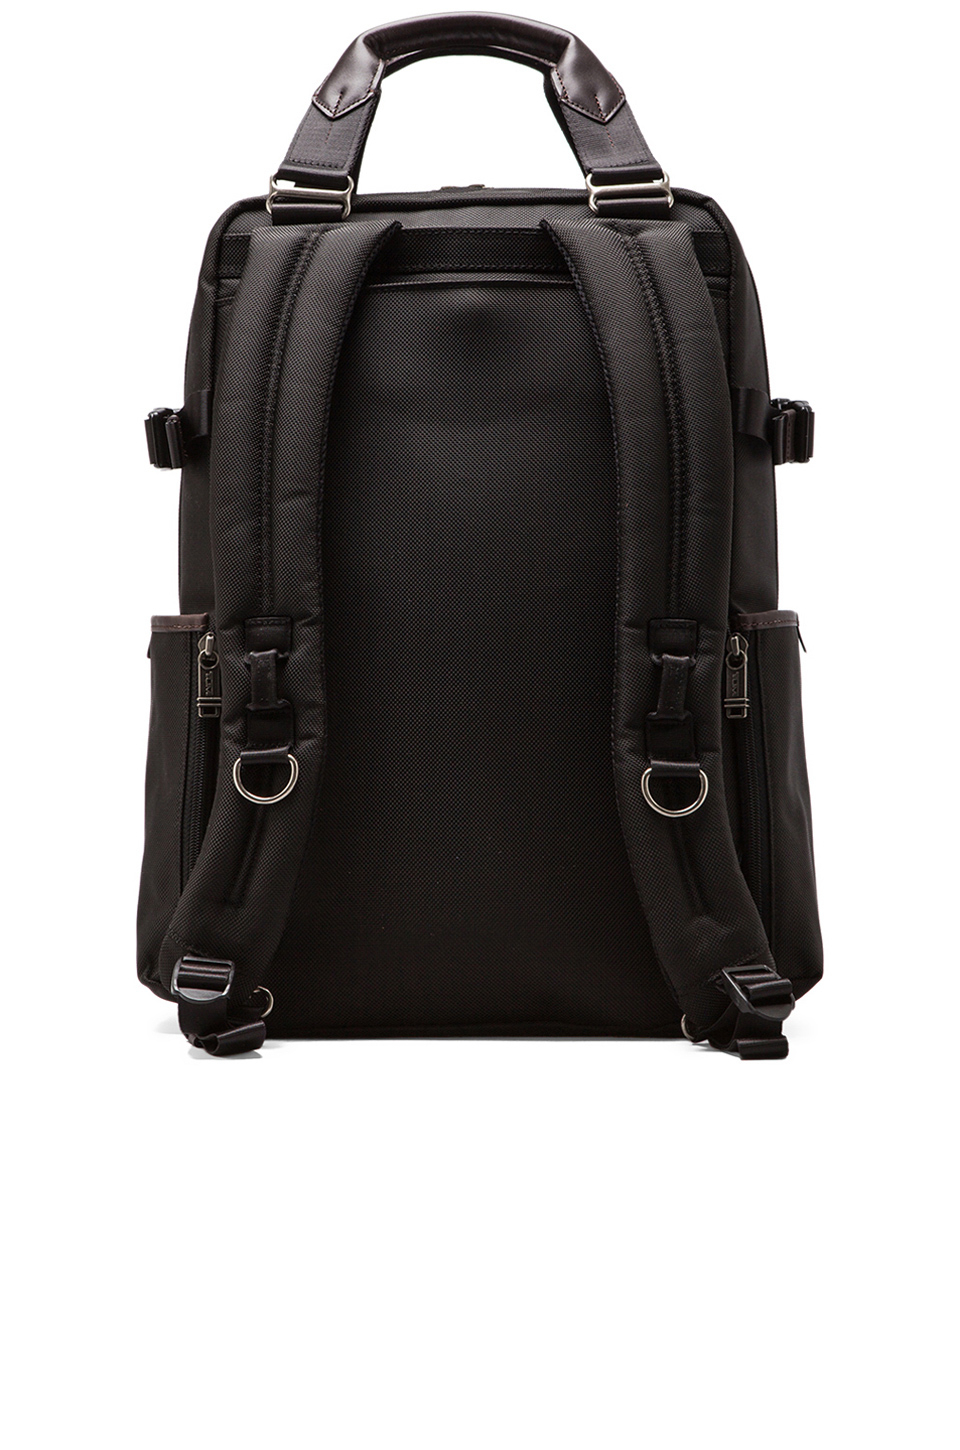 Lyst - Tumi Alpha Bravo Ballistic Nylon Lejeune Backpack Tote in Black